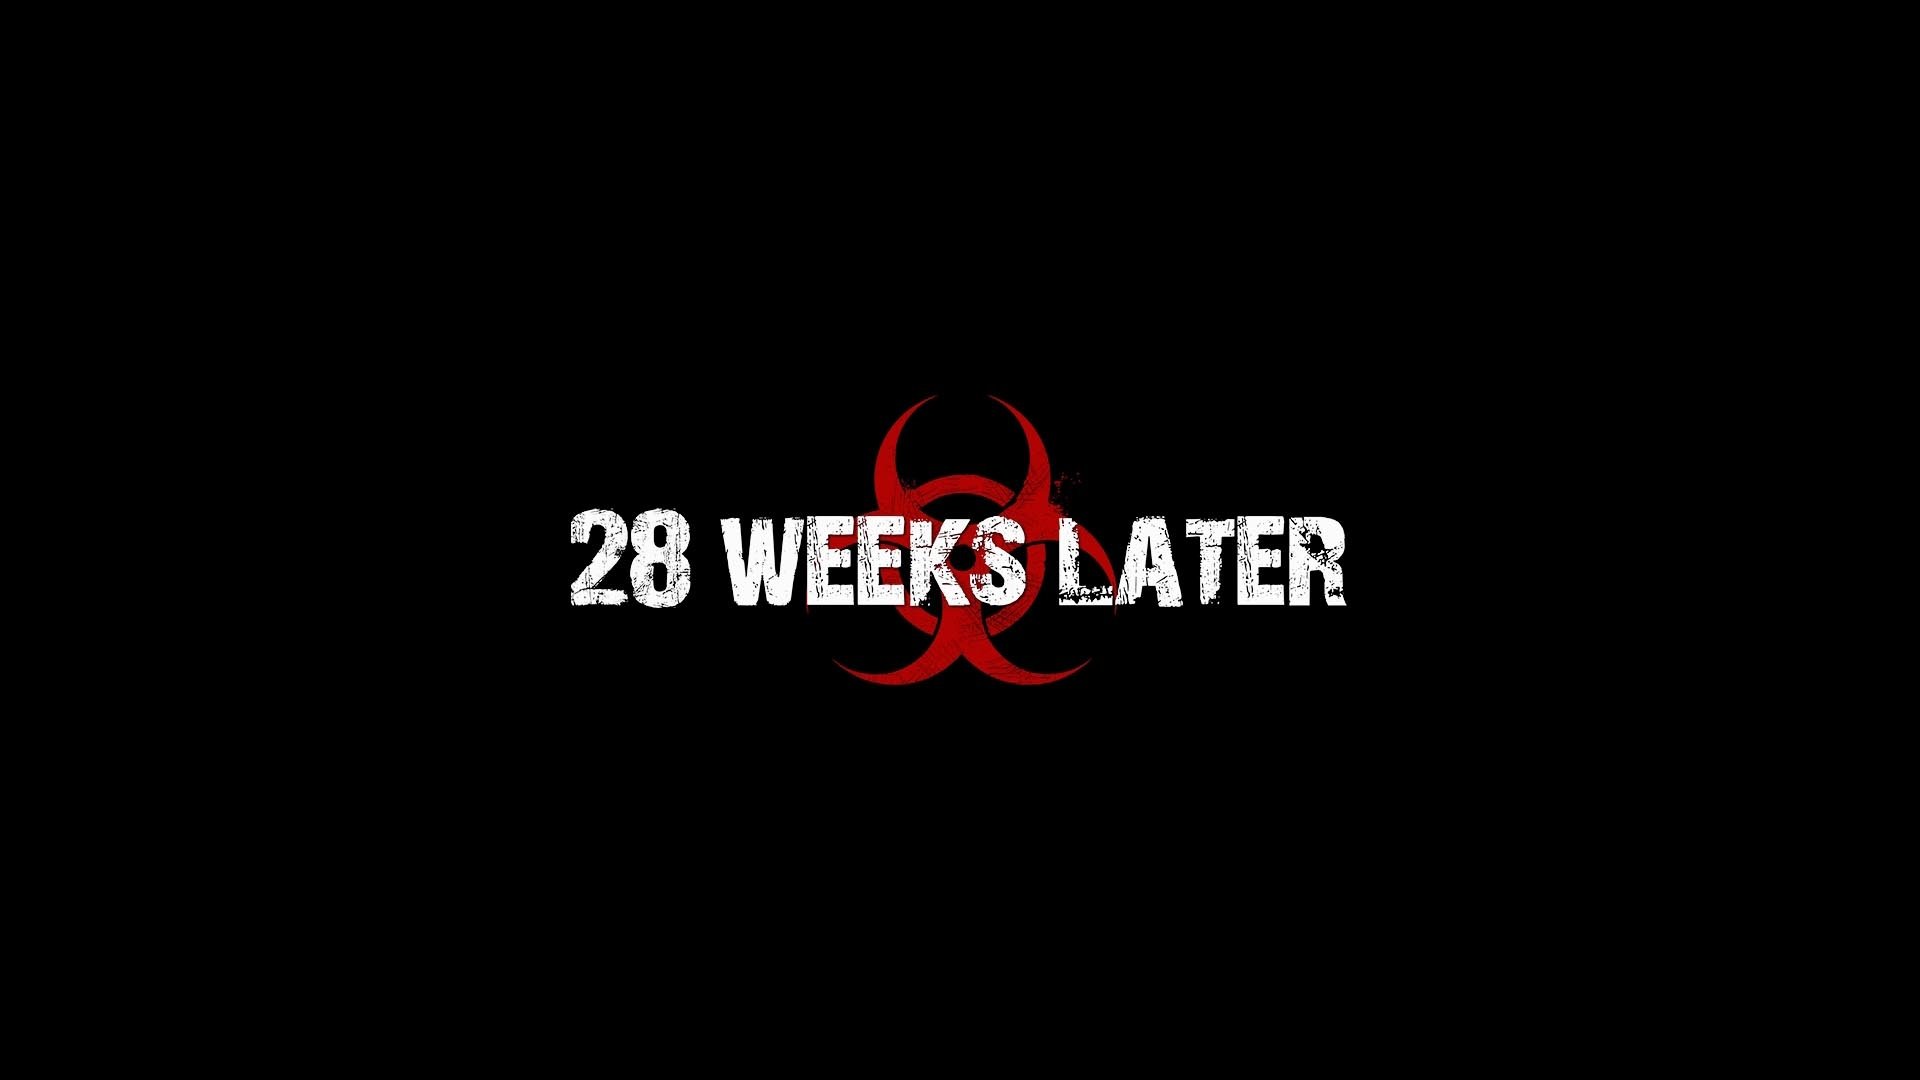 28 days later logo